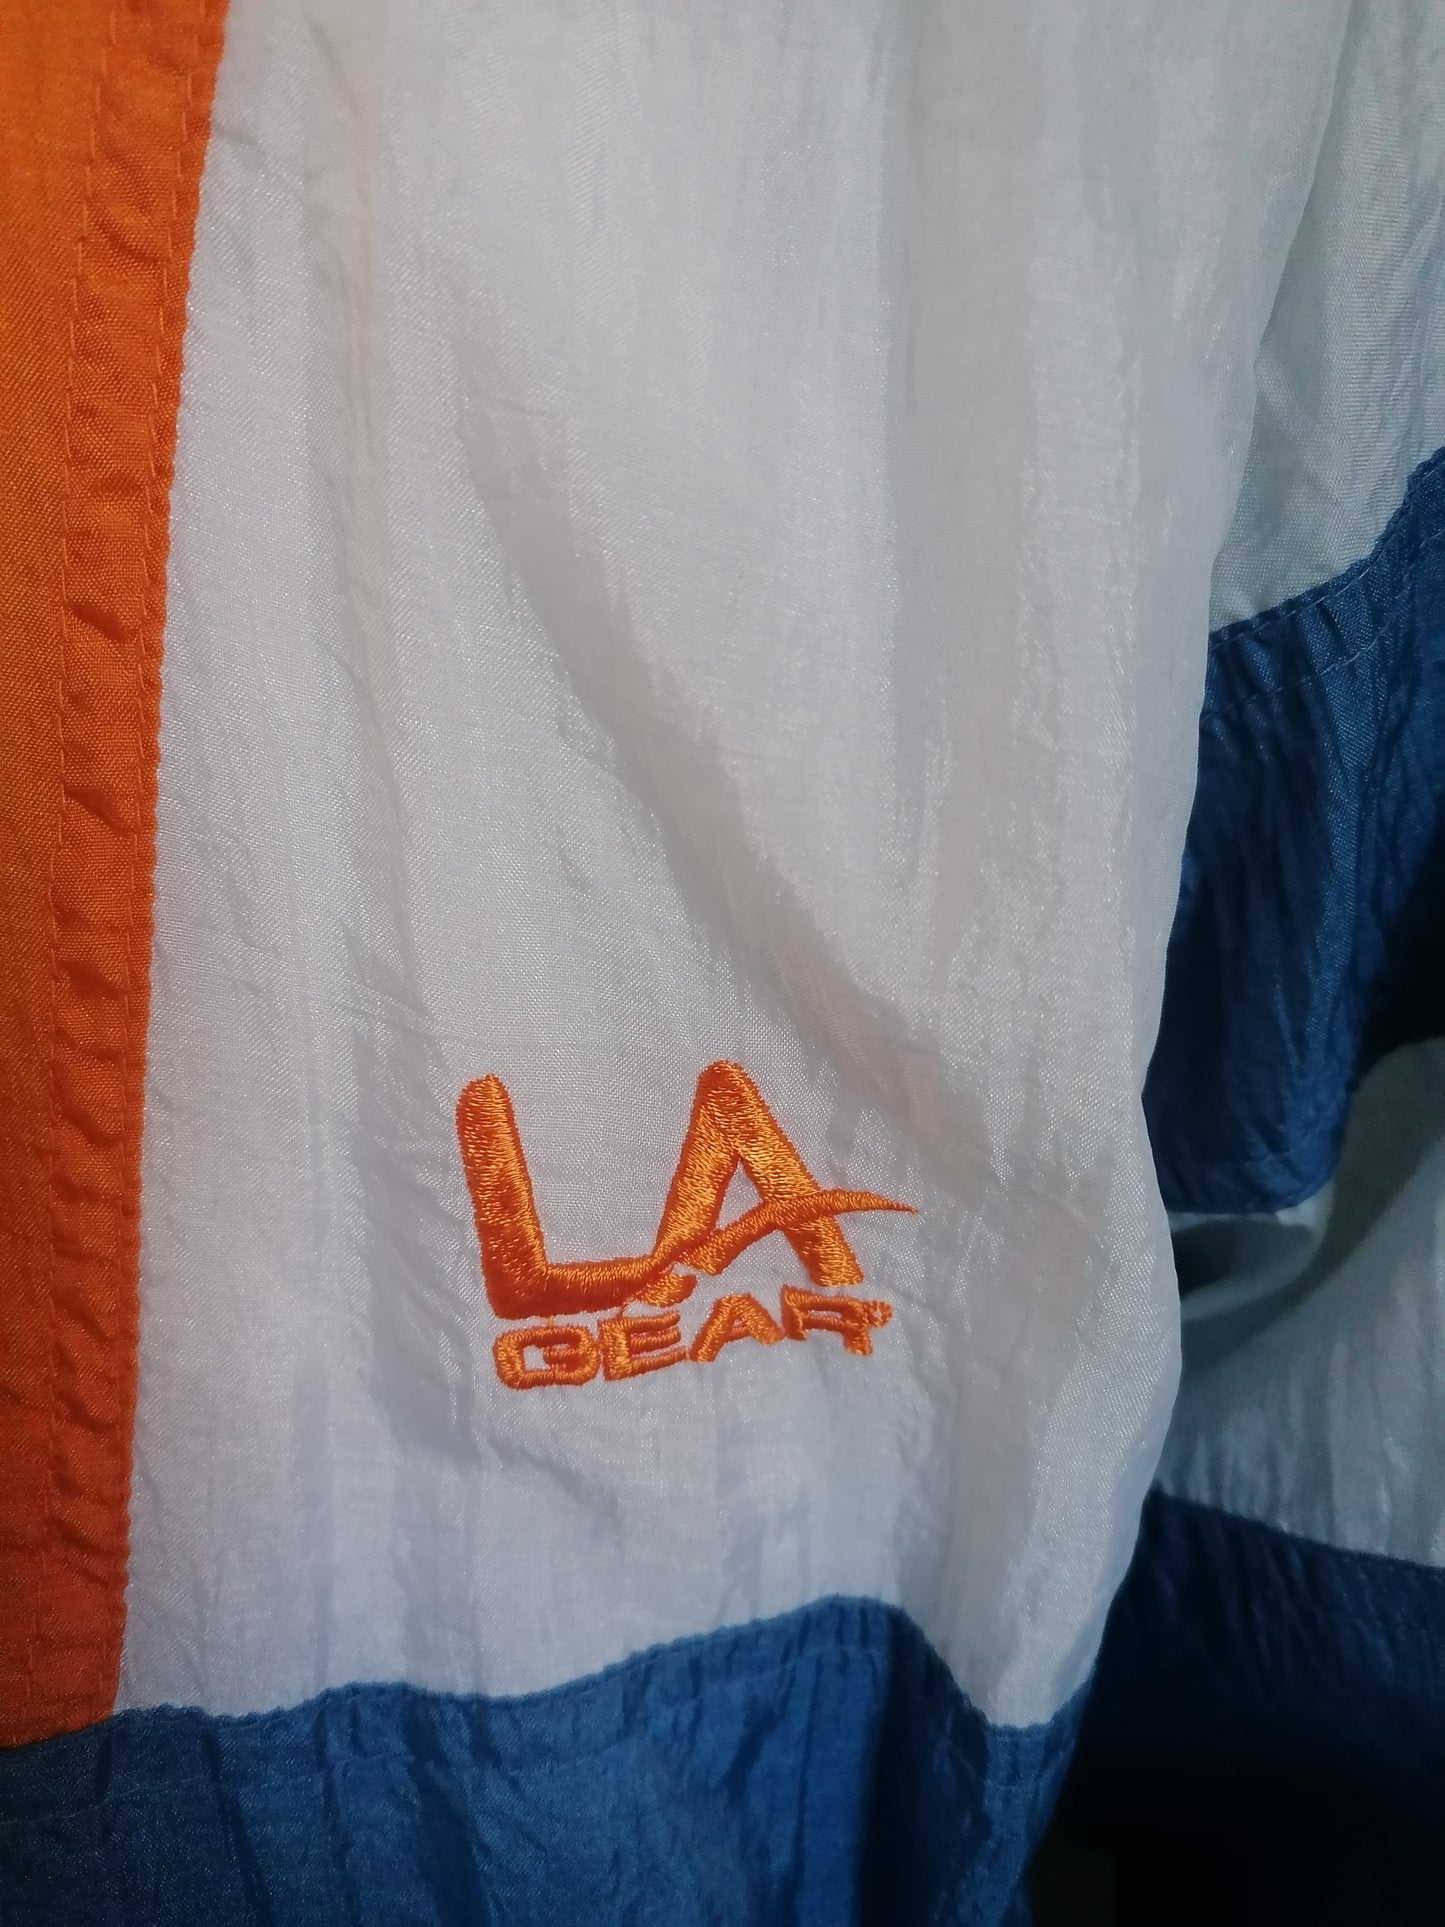 Vintage L.A. Gear  80's-90's trainingsjack!! Oranje Blauw Wit gekleurd. Maat L.